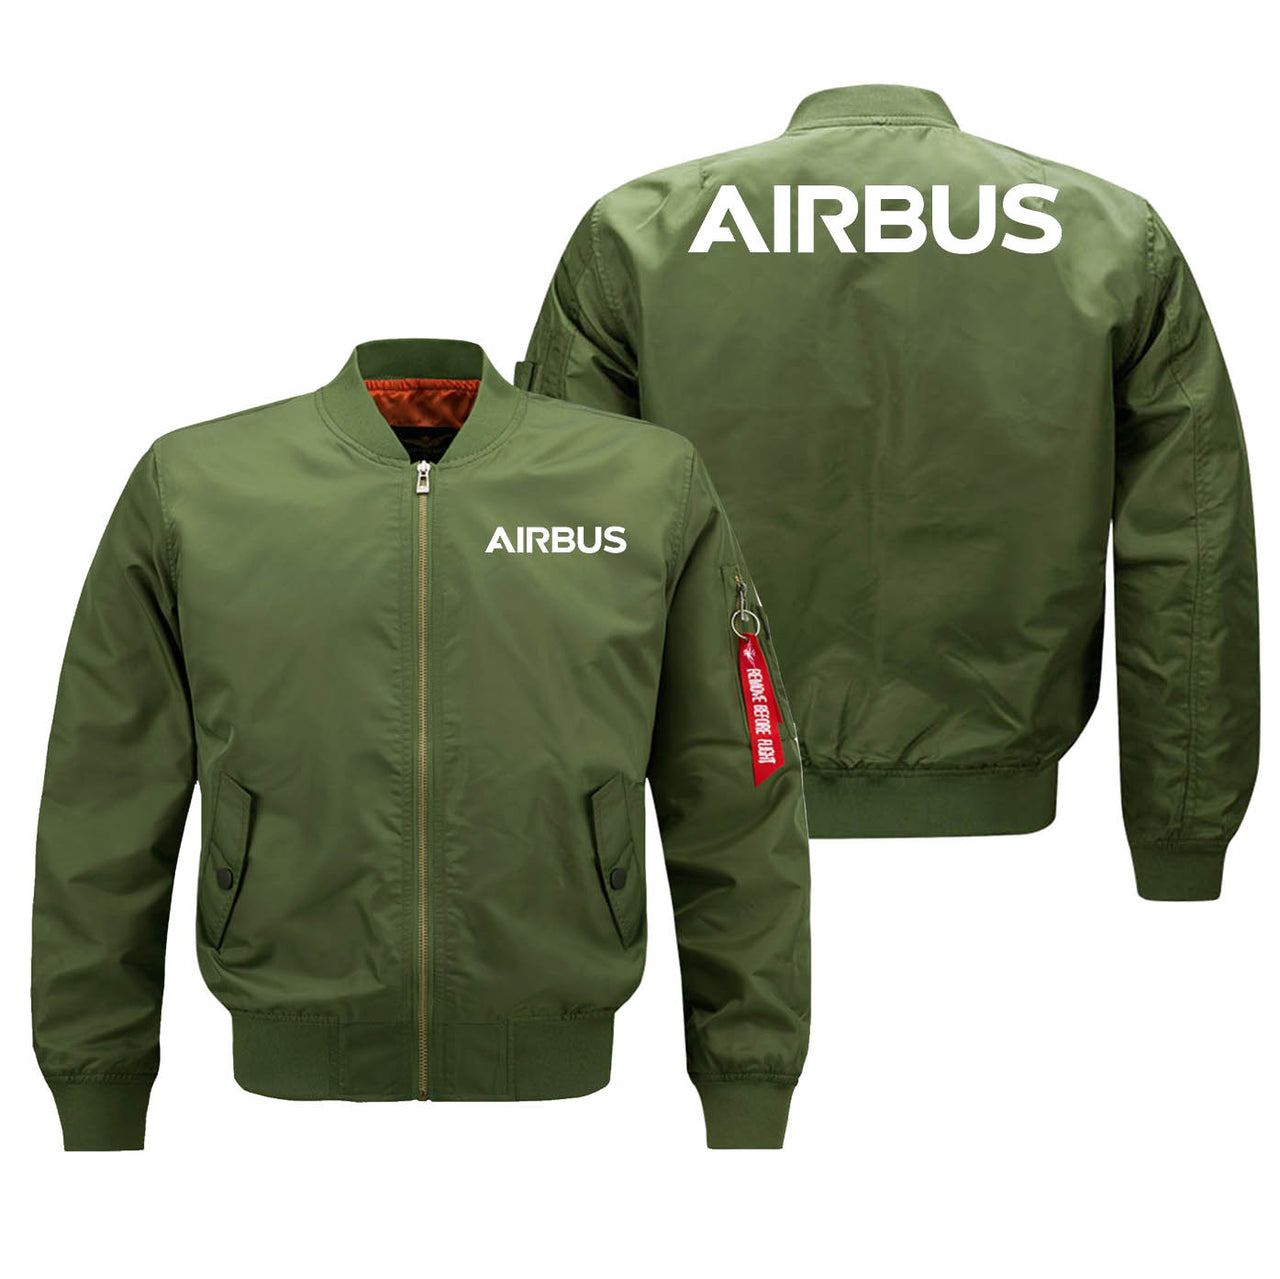 Airbus & Text Designed Pilot Jackets (Customizable)